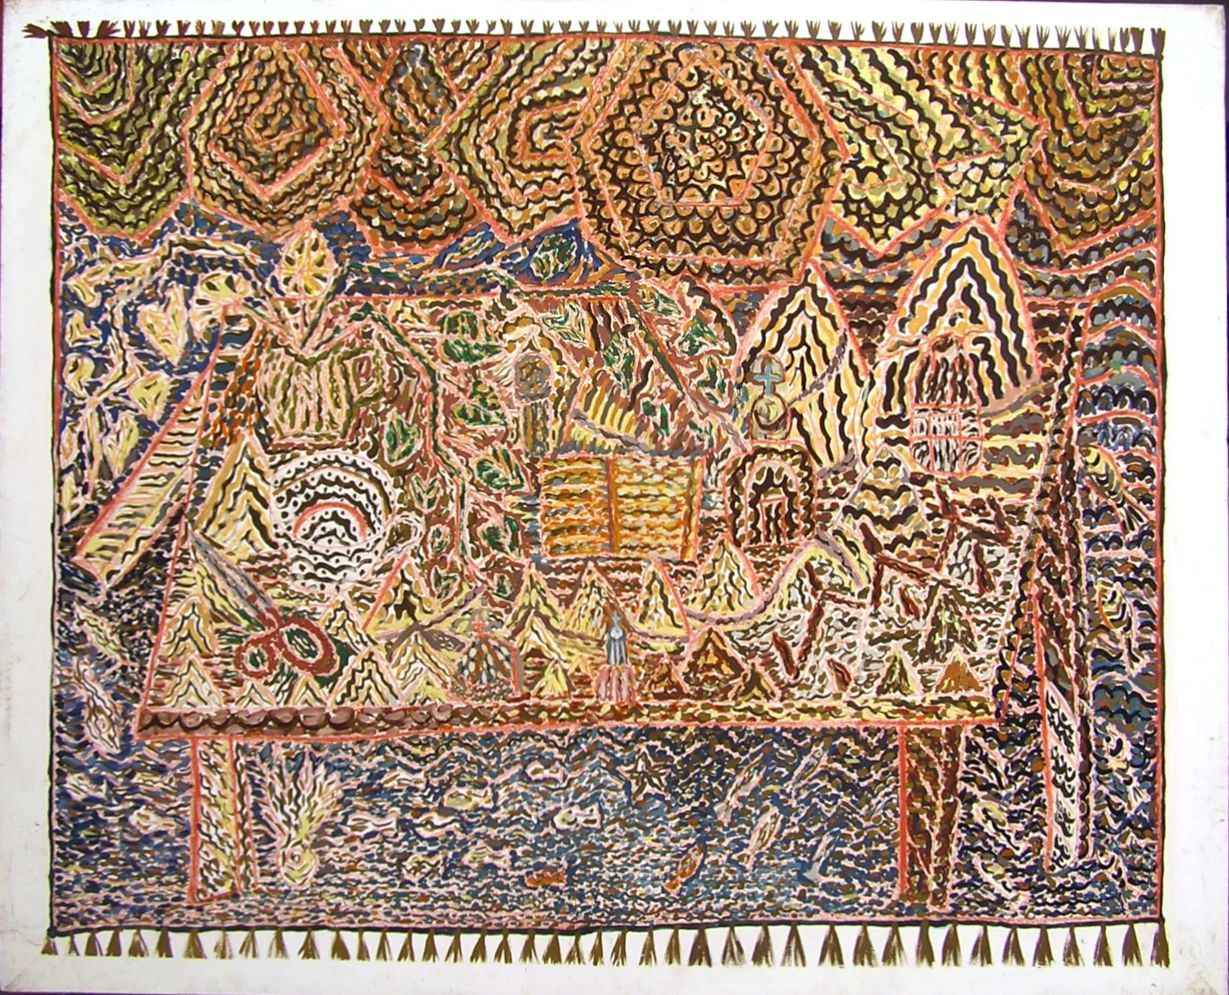 Gestural mosaic. Oil on canvas, 106 x 87 (cm)